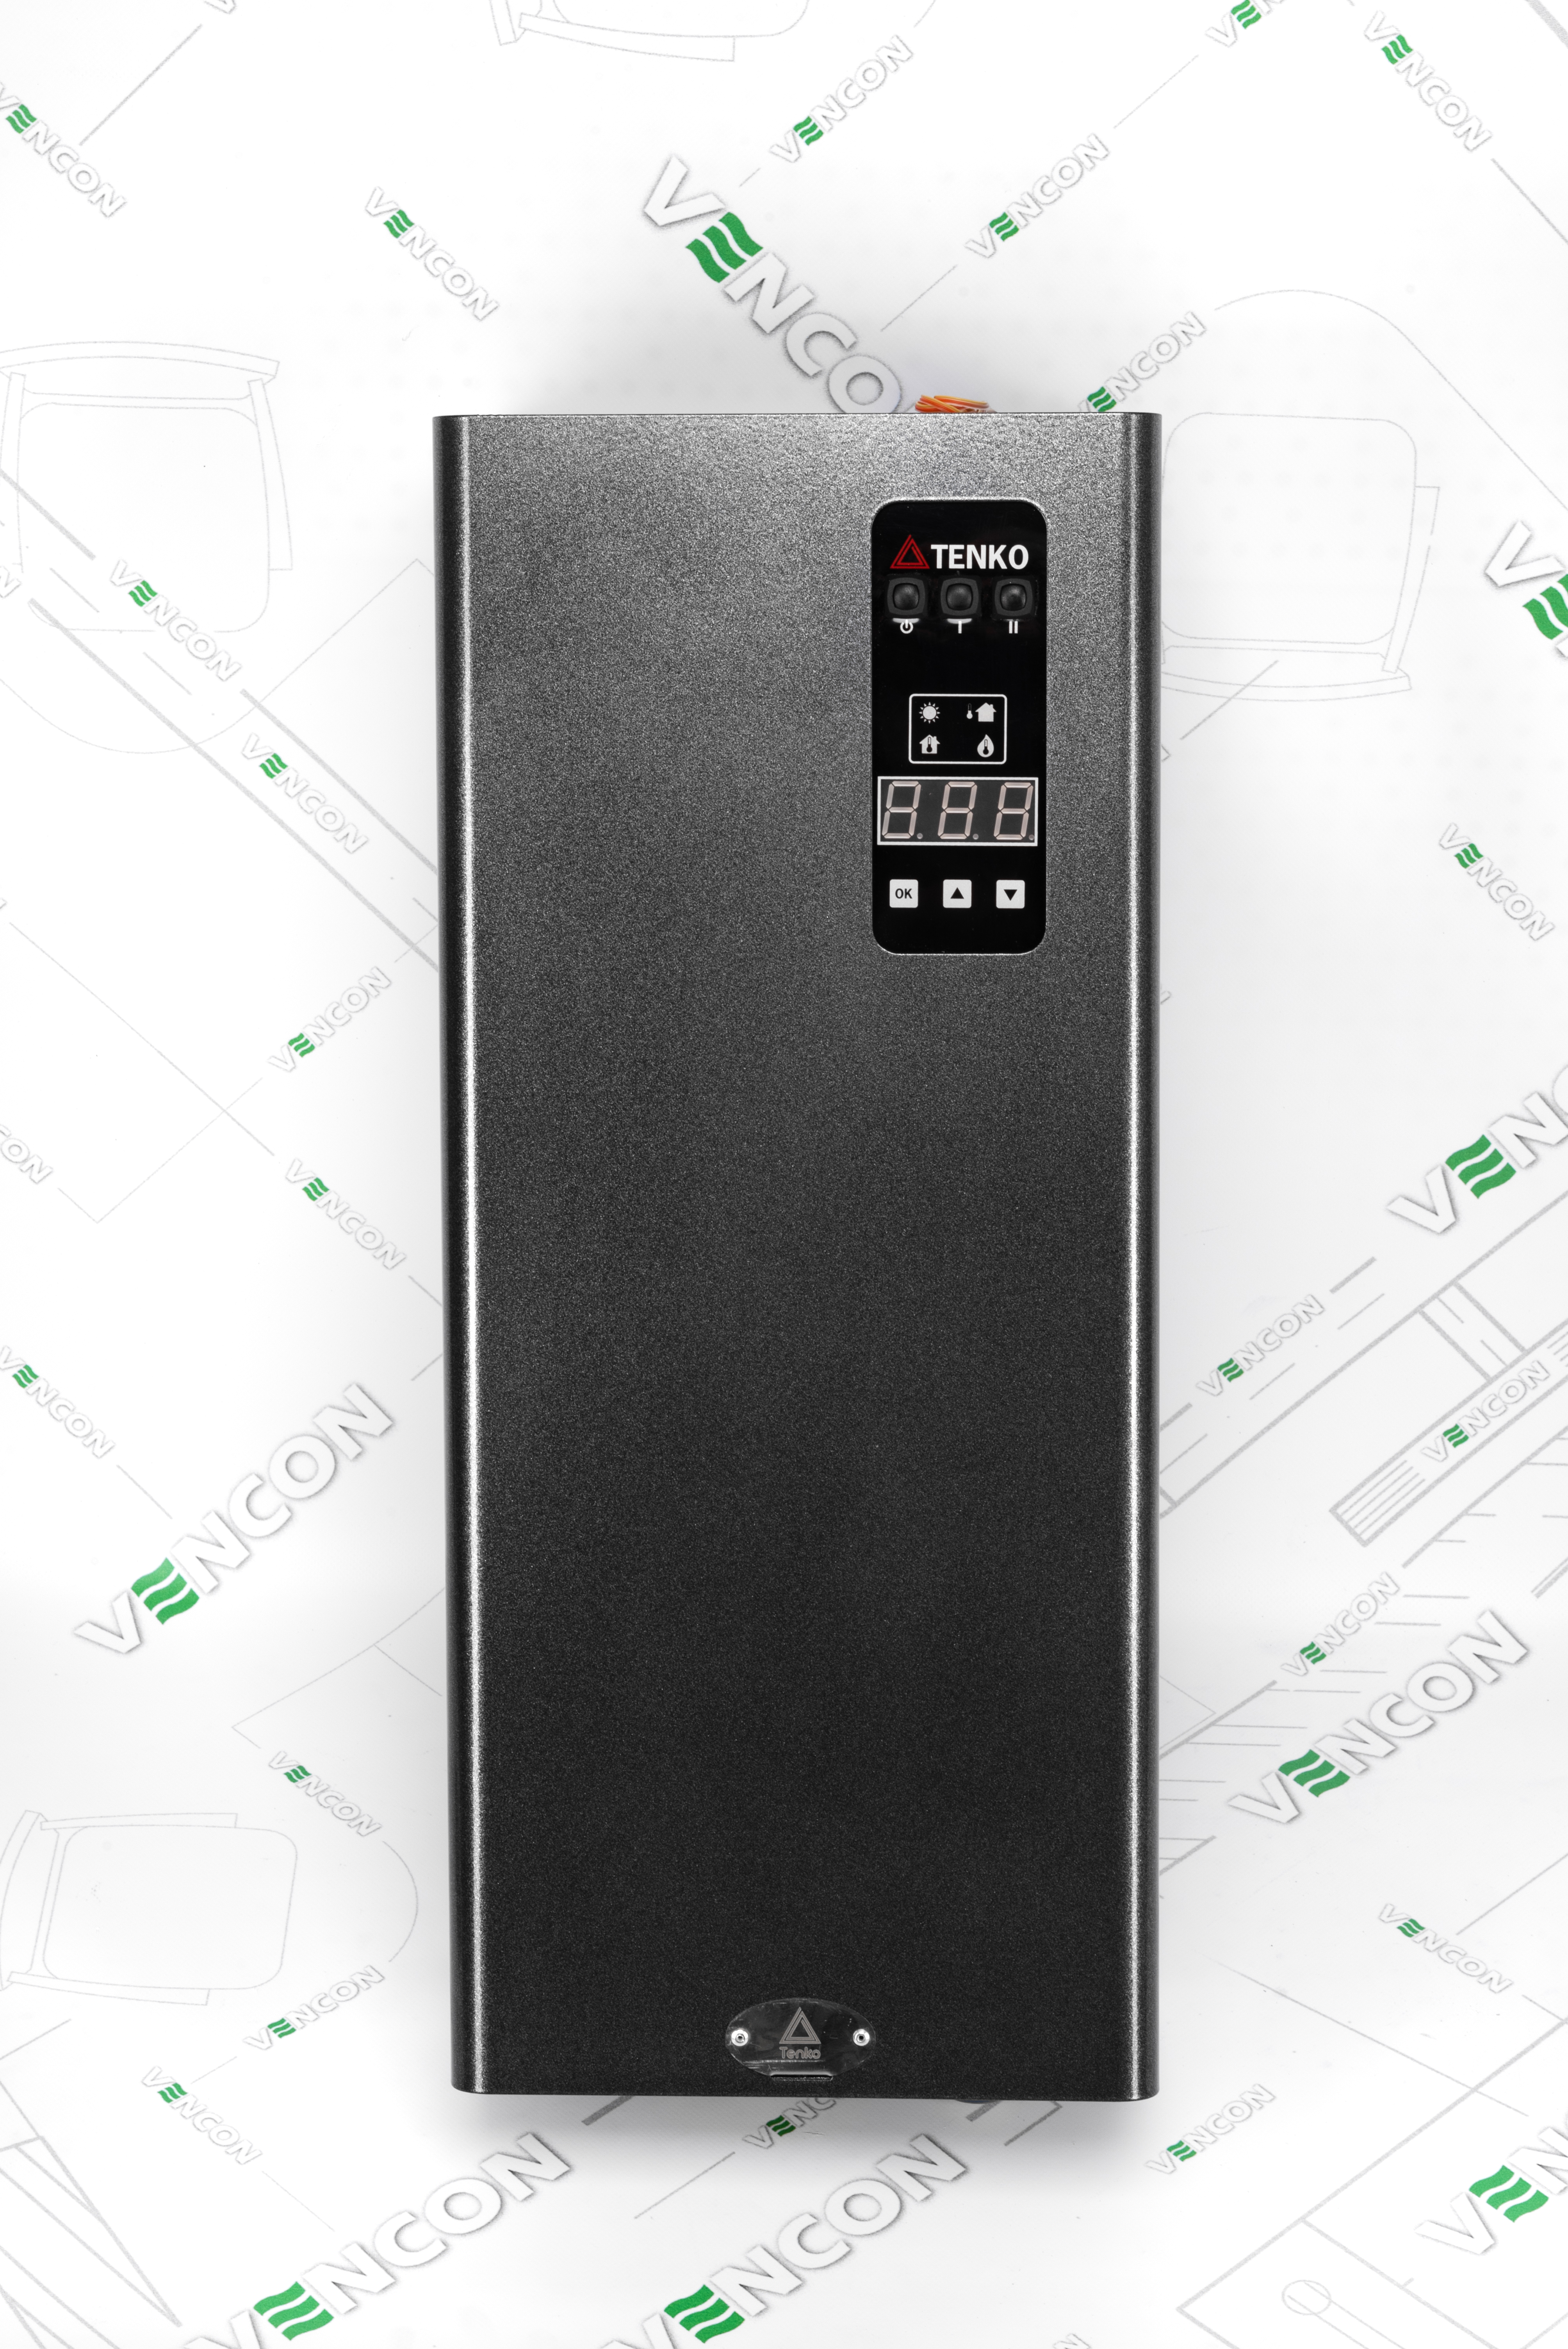 Электрический котел Tenko Digital Standart 9 380 цена 11589.00 грн - фотография 2